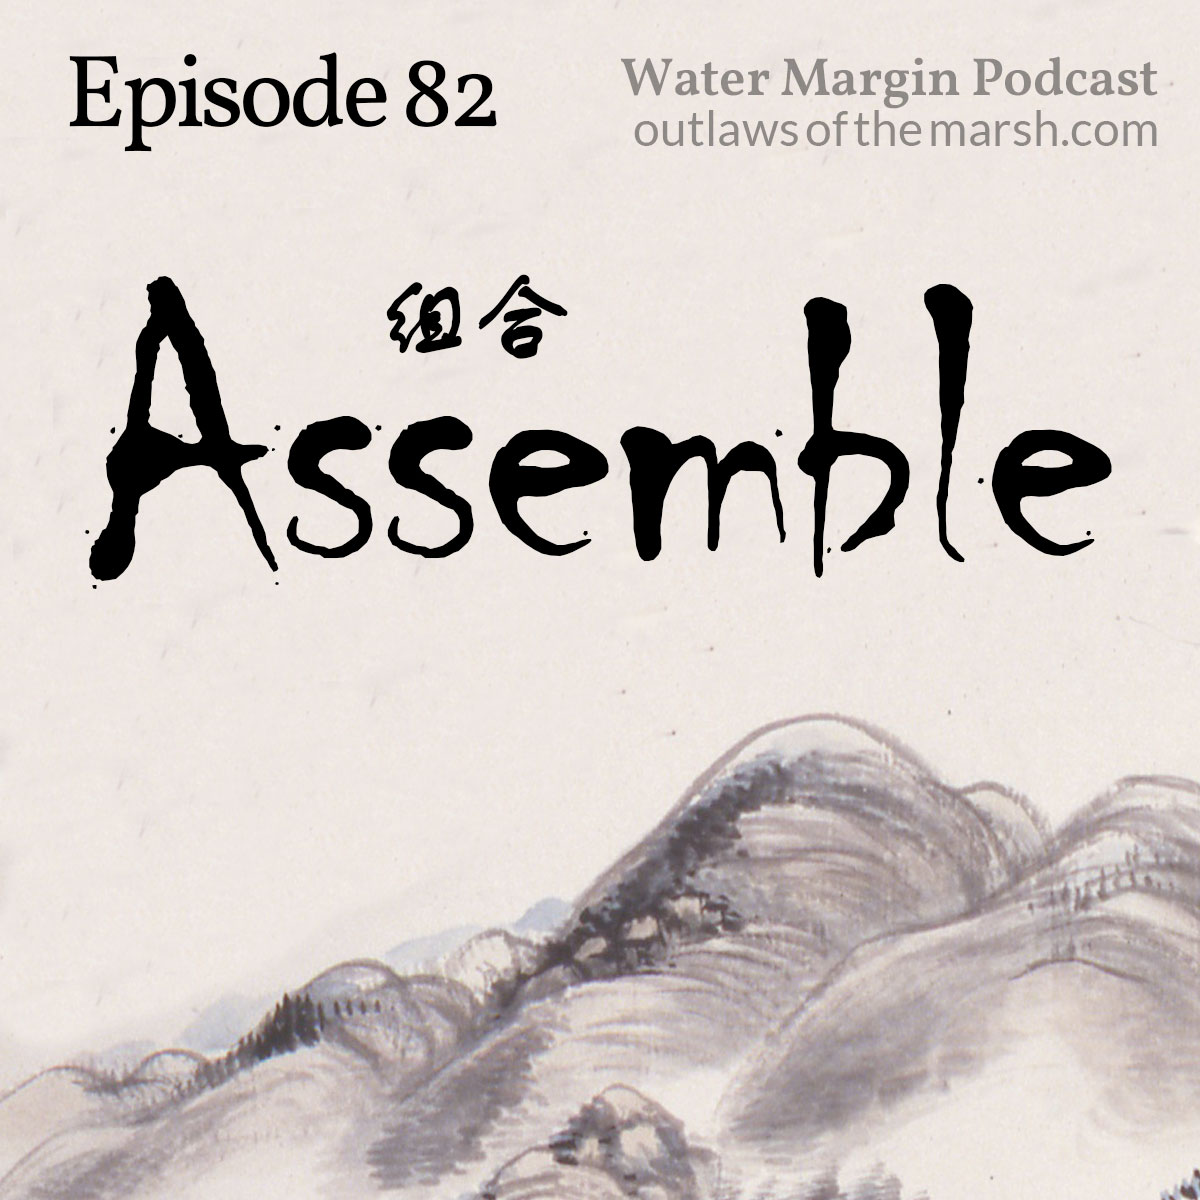 Water Margin Podcast: Episode 082